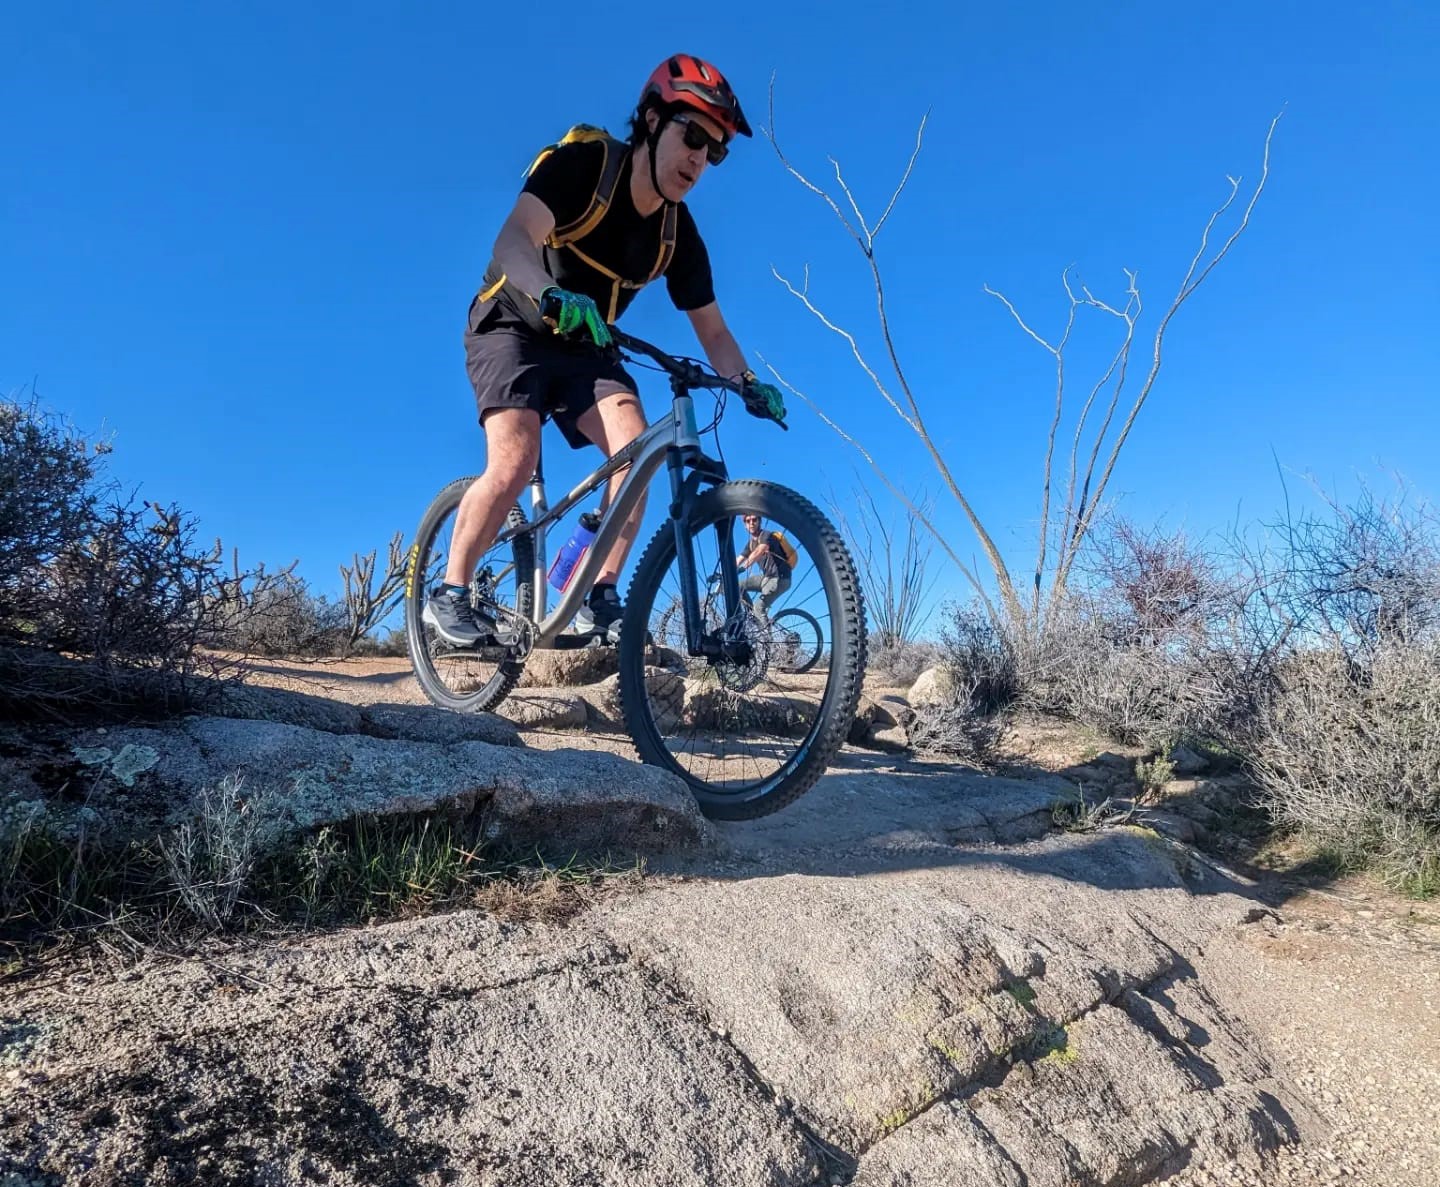 During a Phoenix mountain bike tour, a Wild Bunch guest descends a rocky down hill.